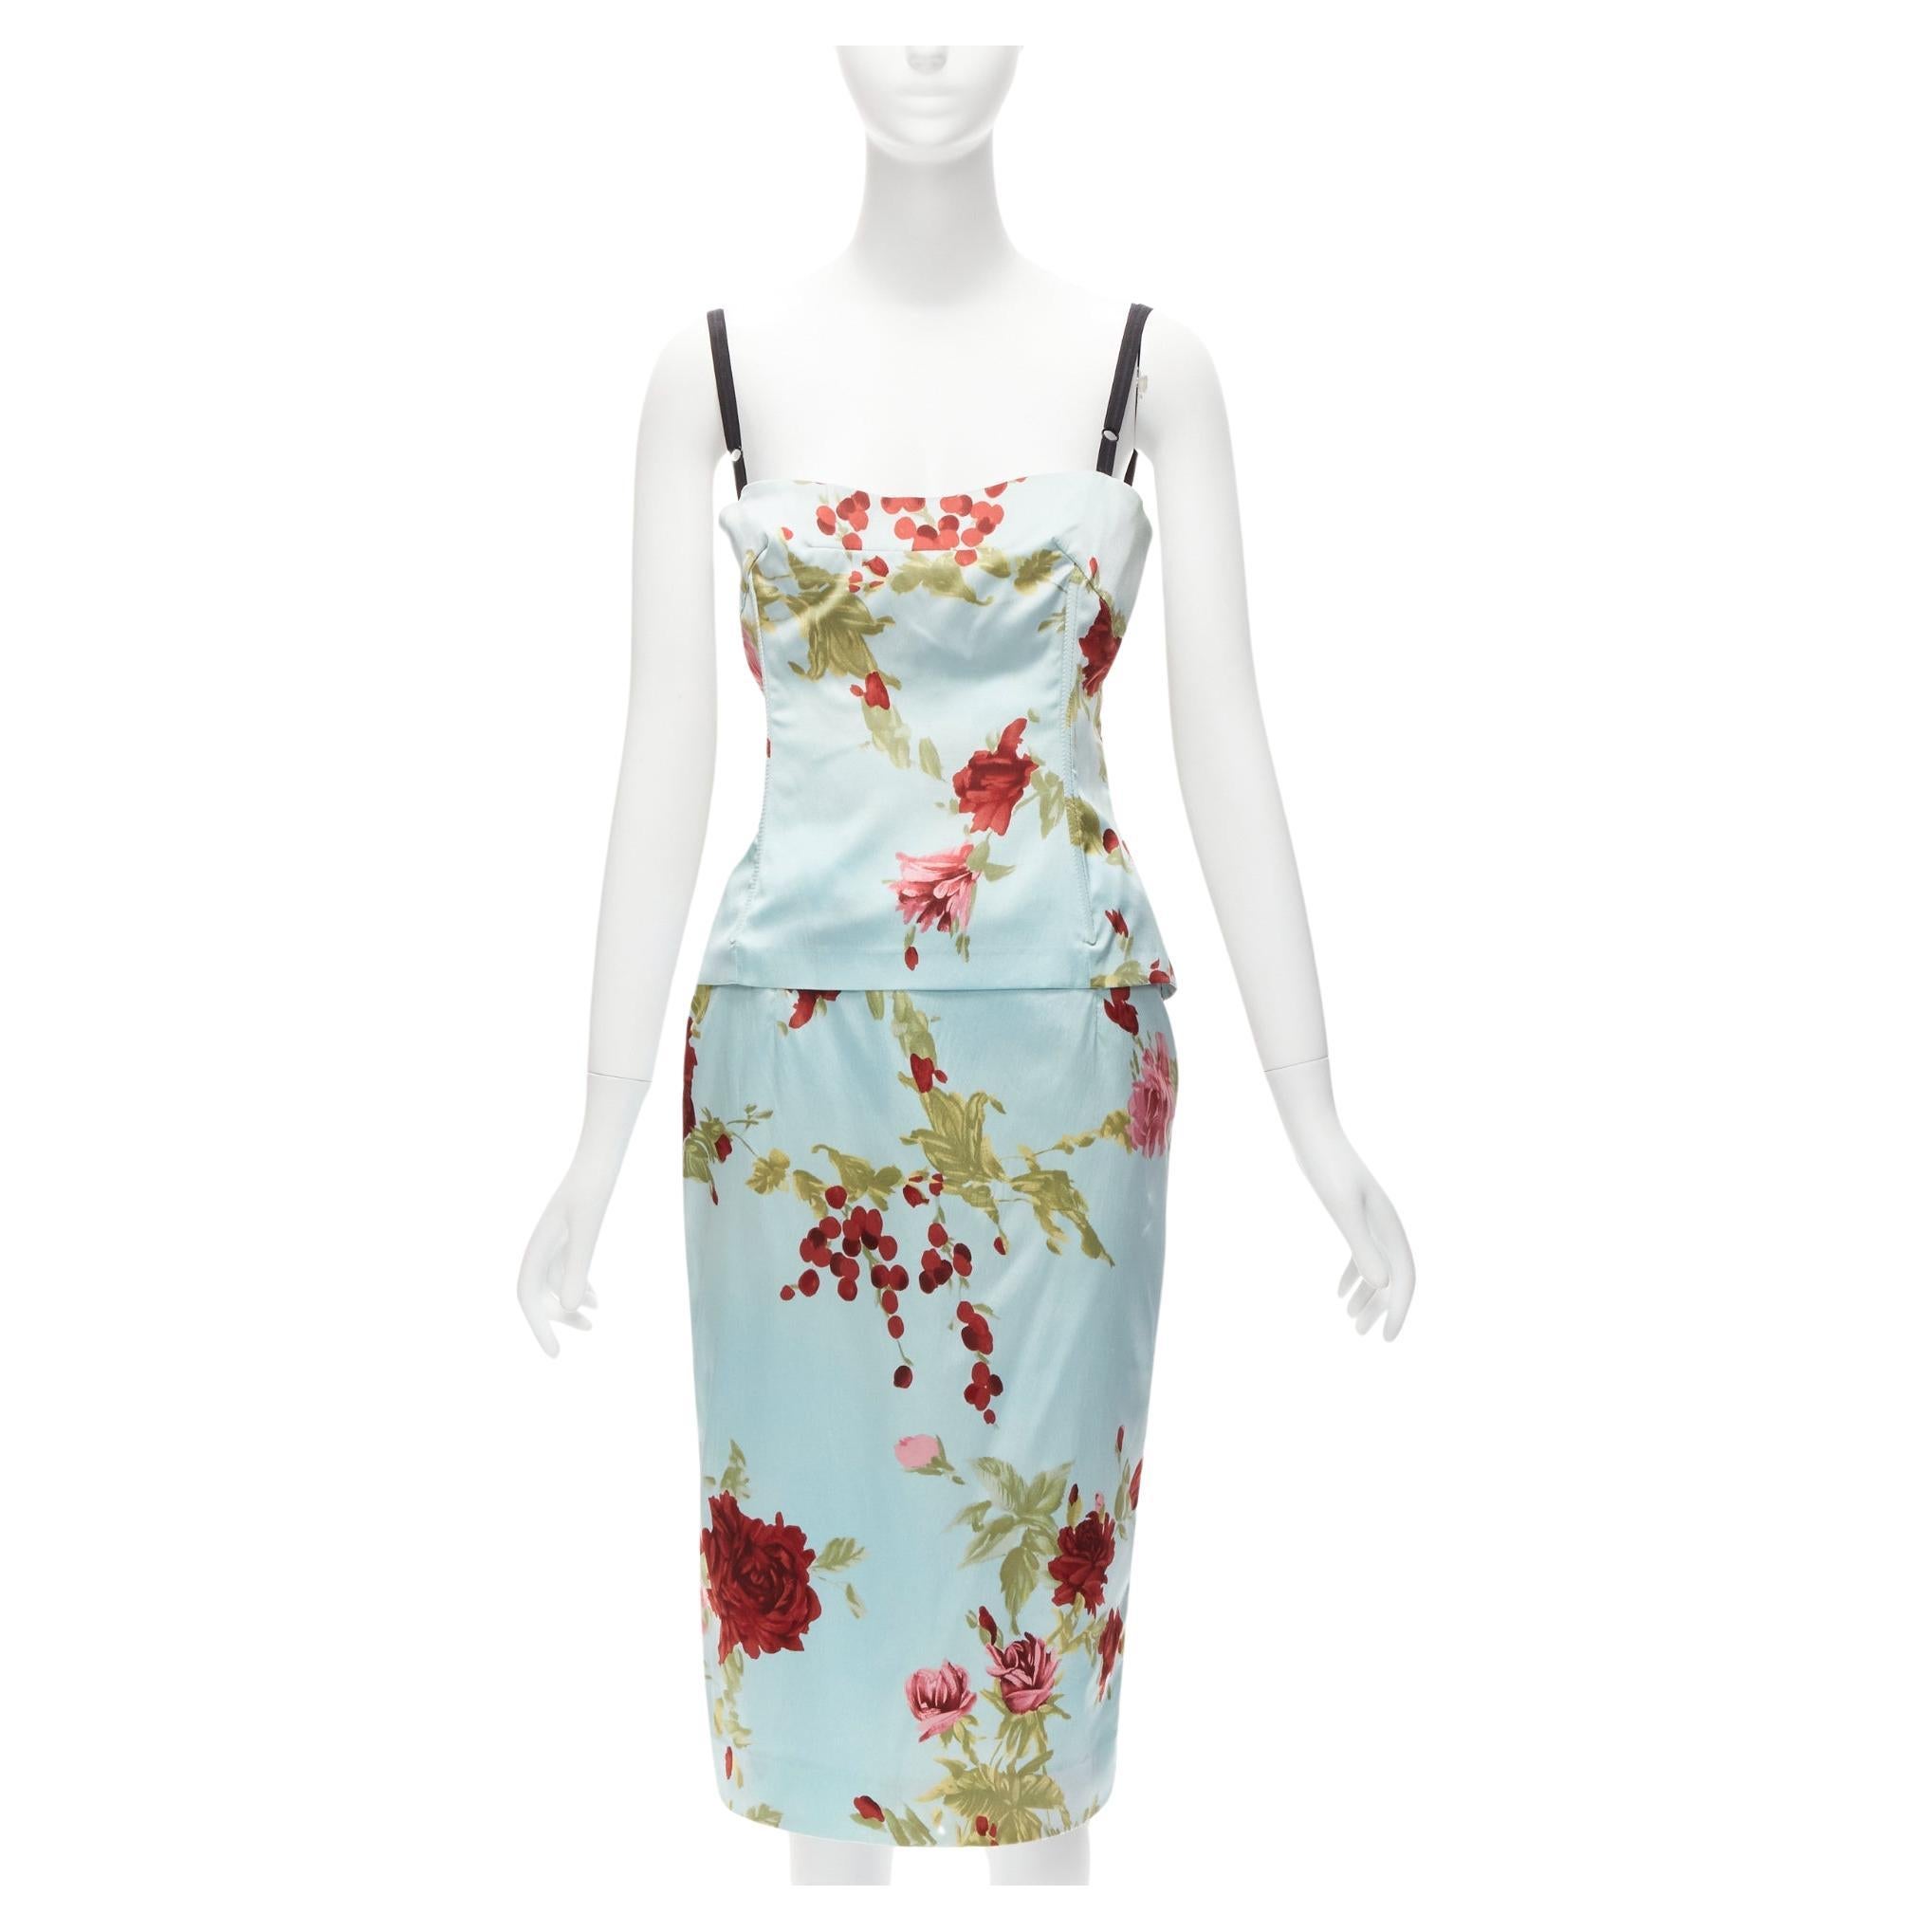 DOLCE GABBANA Vintage floral silk camisole top skirt set IT44 L Carrie Bradshaw For Sale